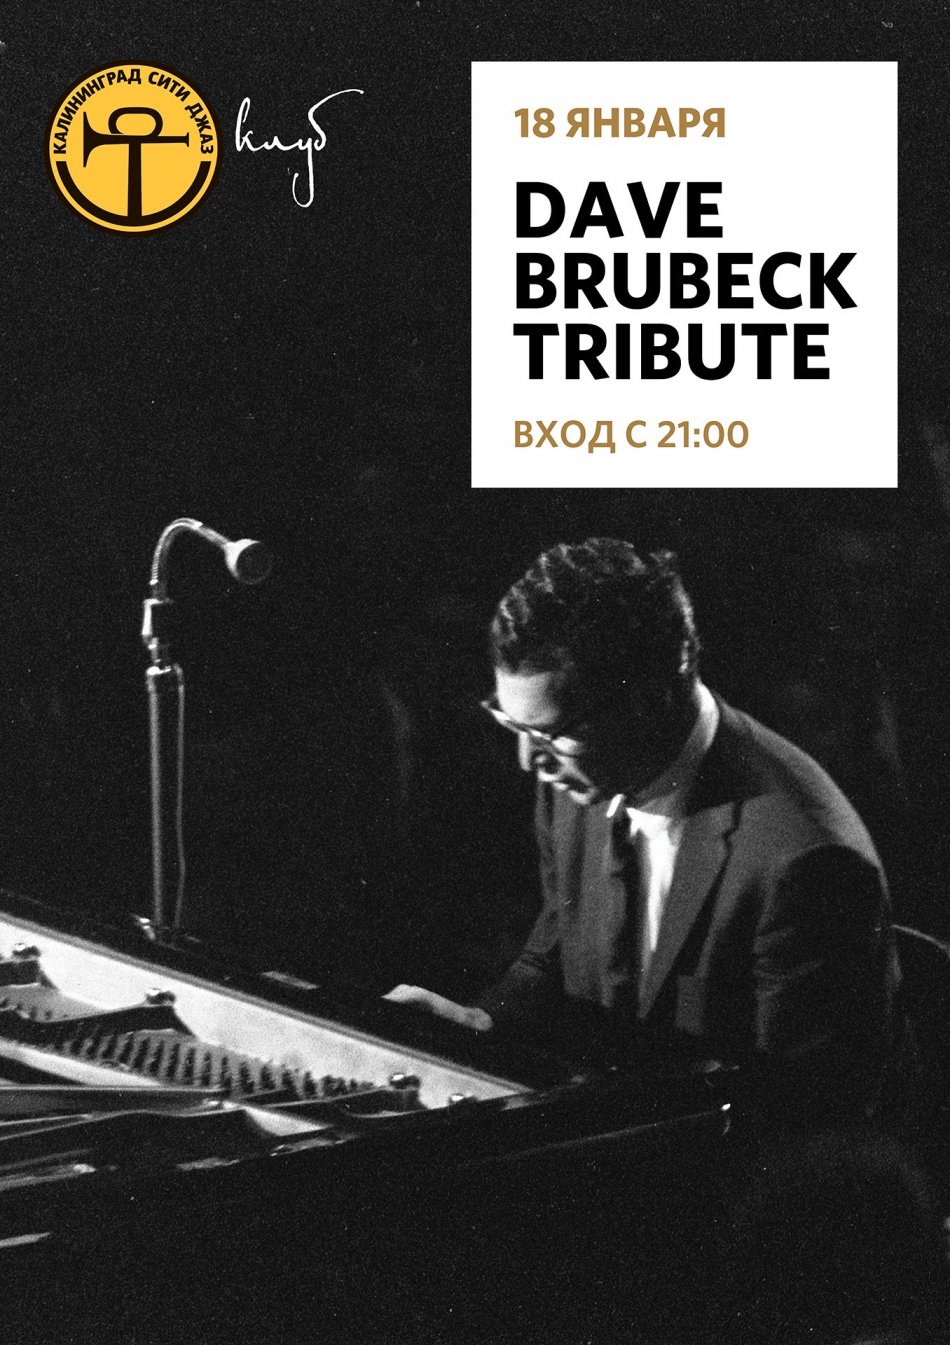 Dave Brubeck Tribute